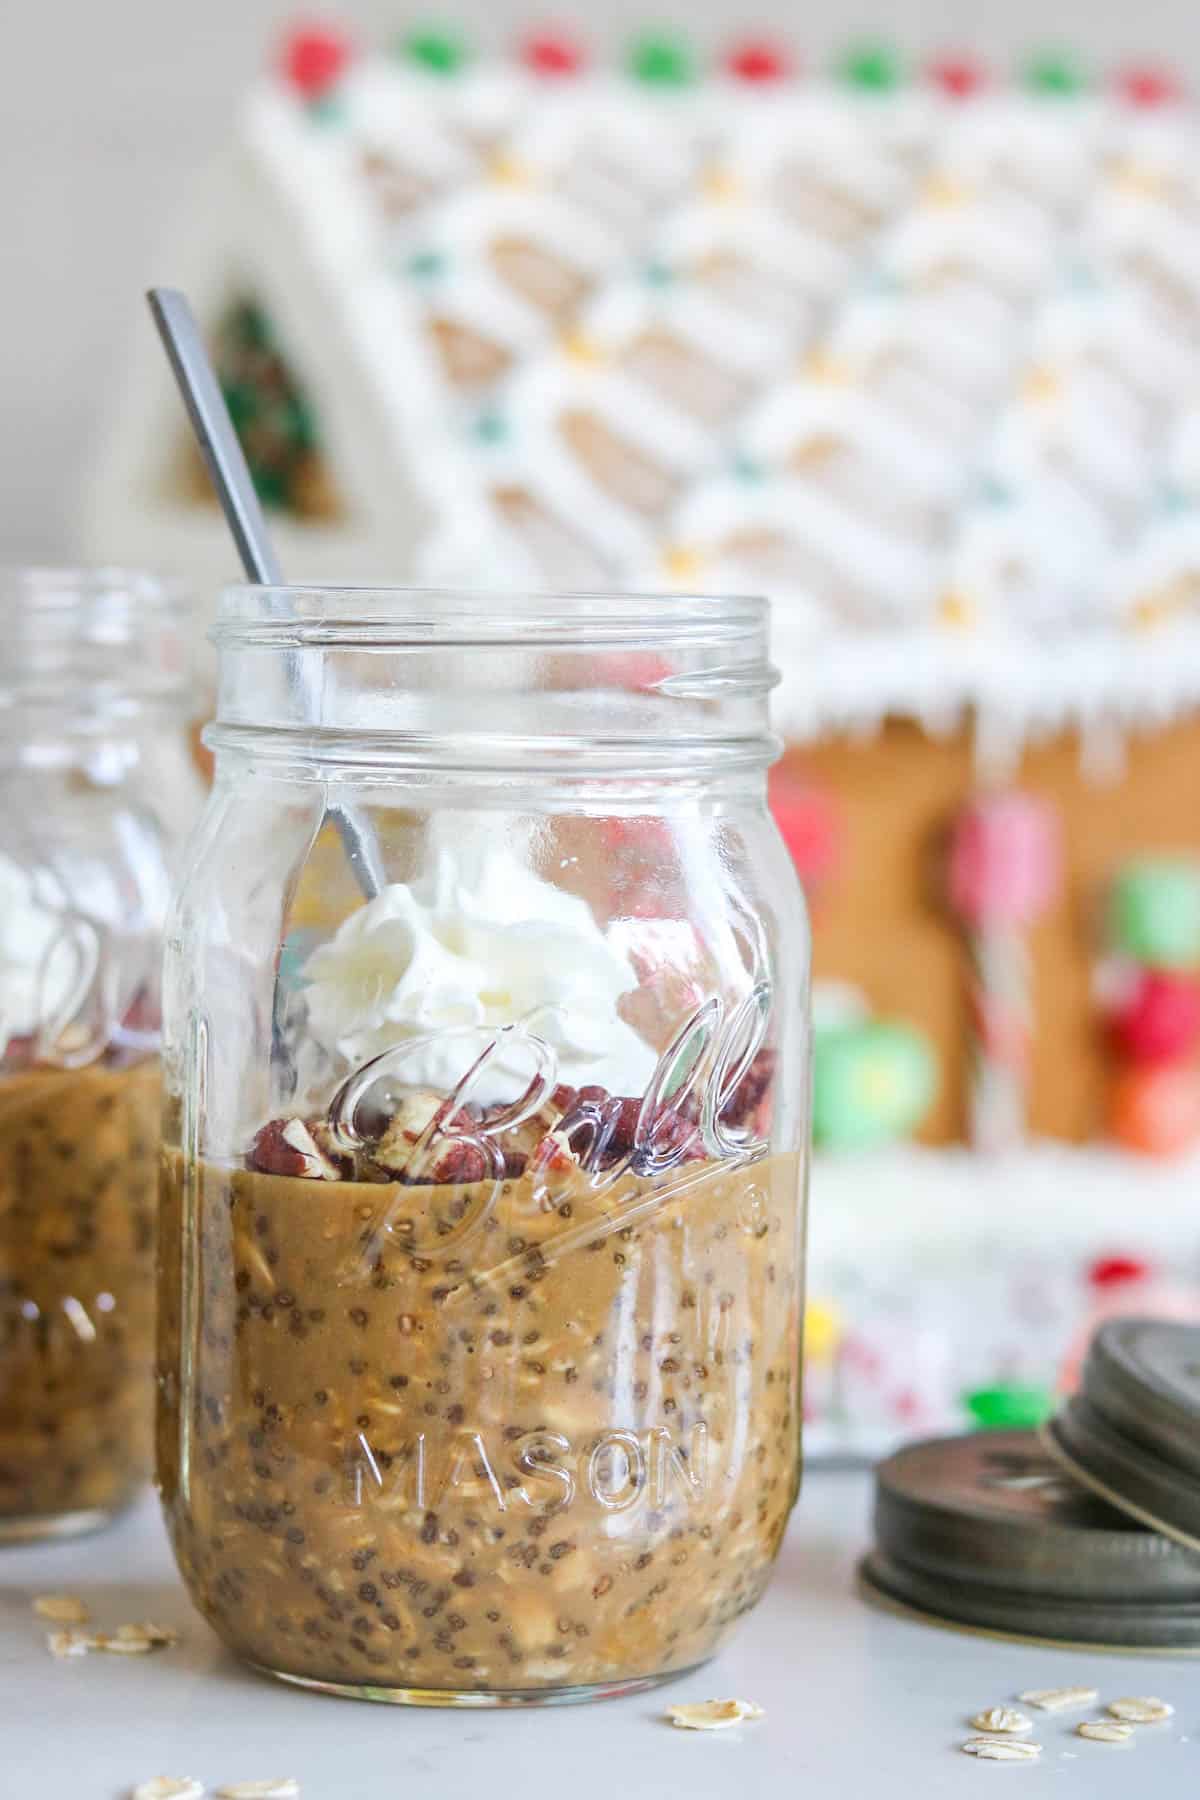 gingerbread overnight oats in a mason jar